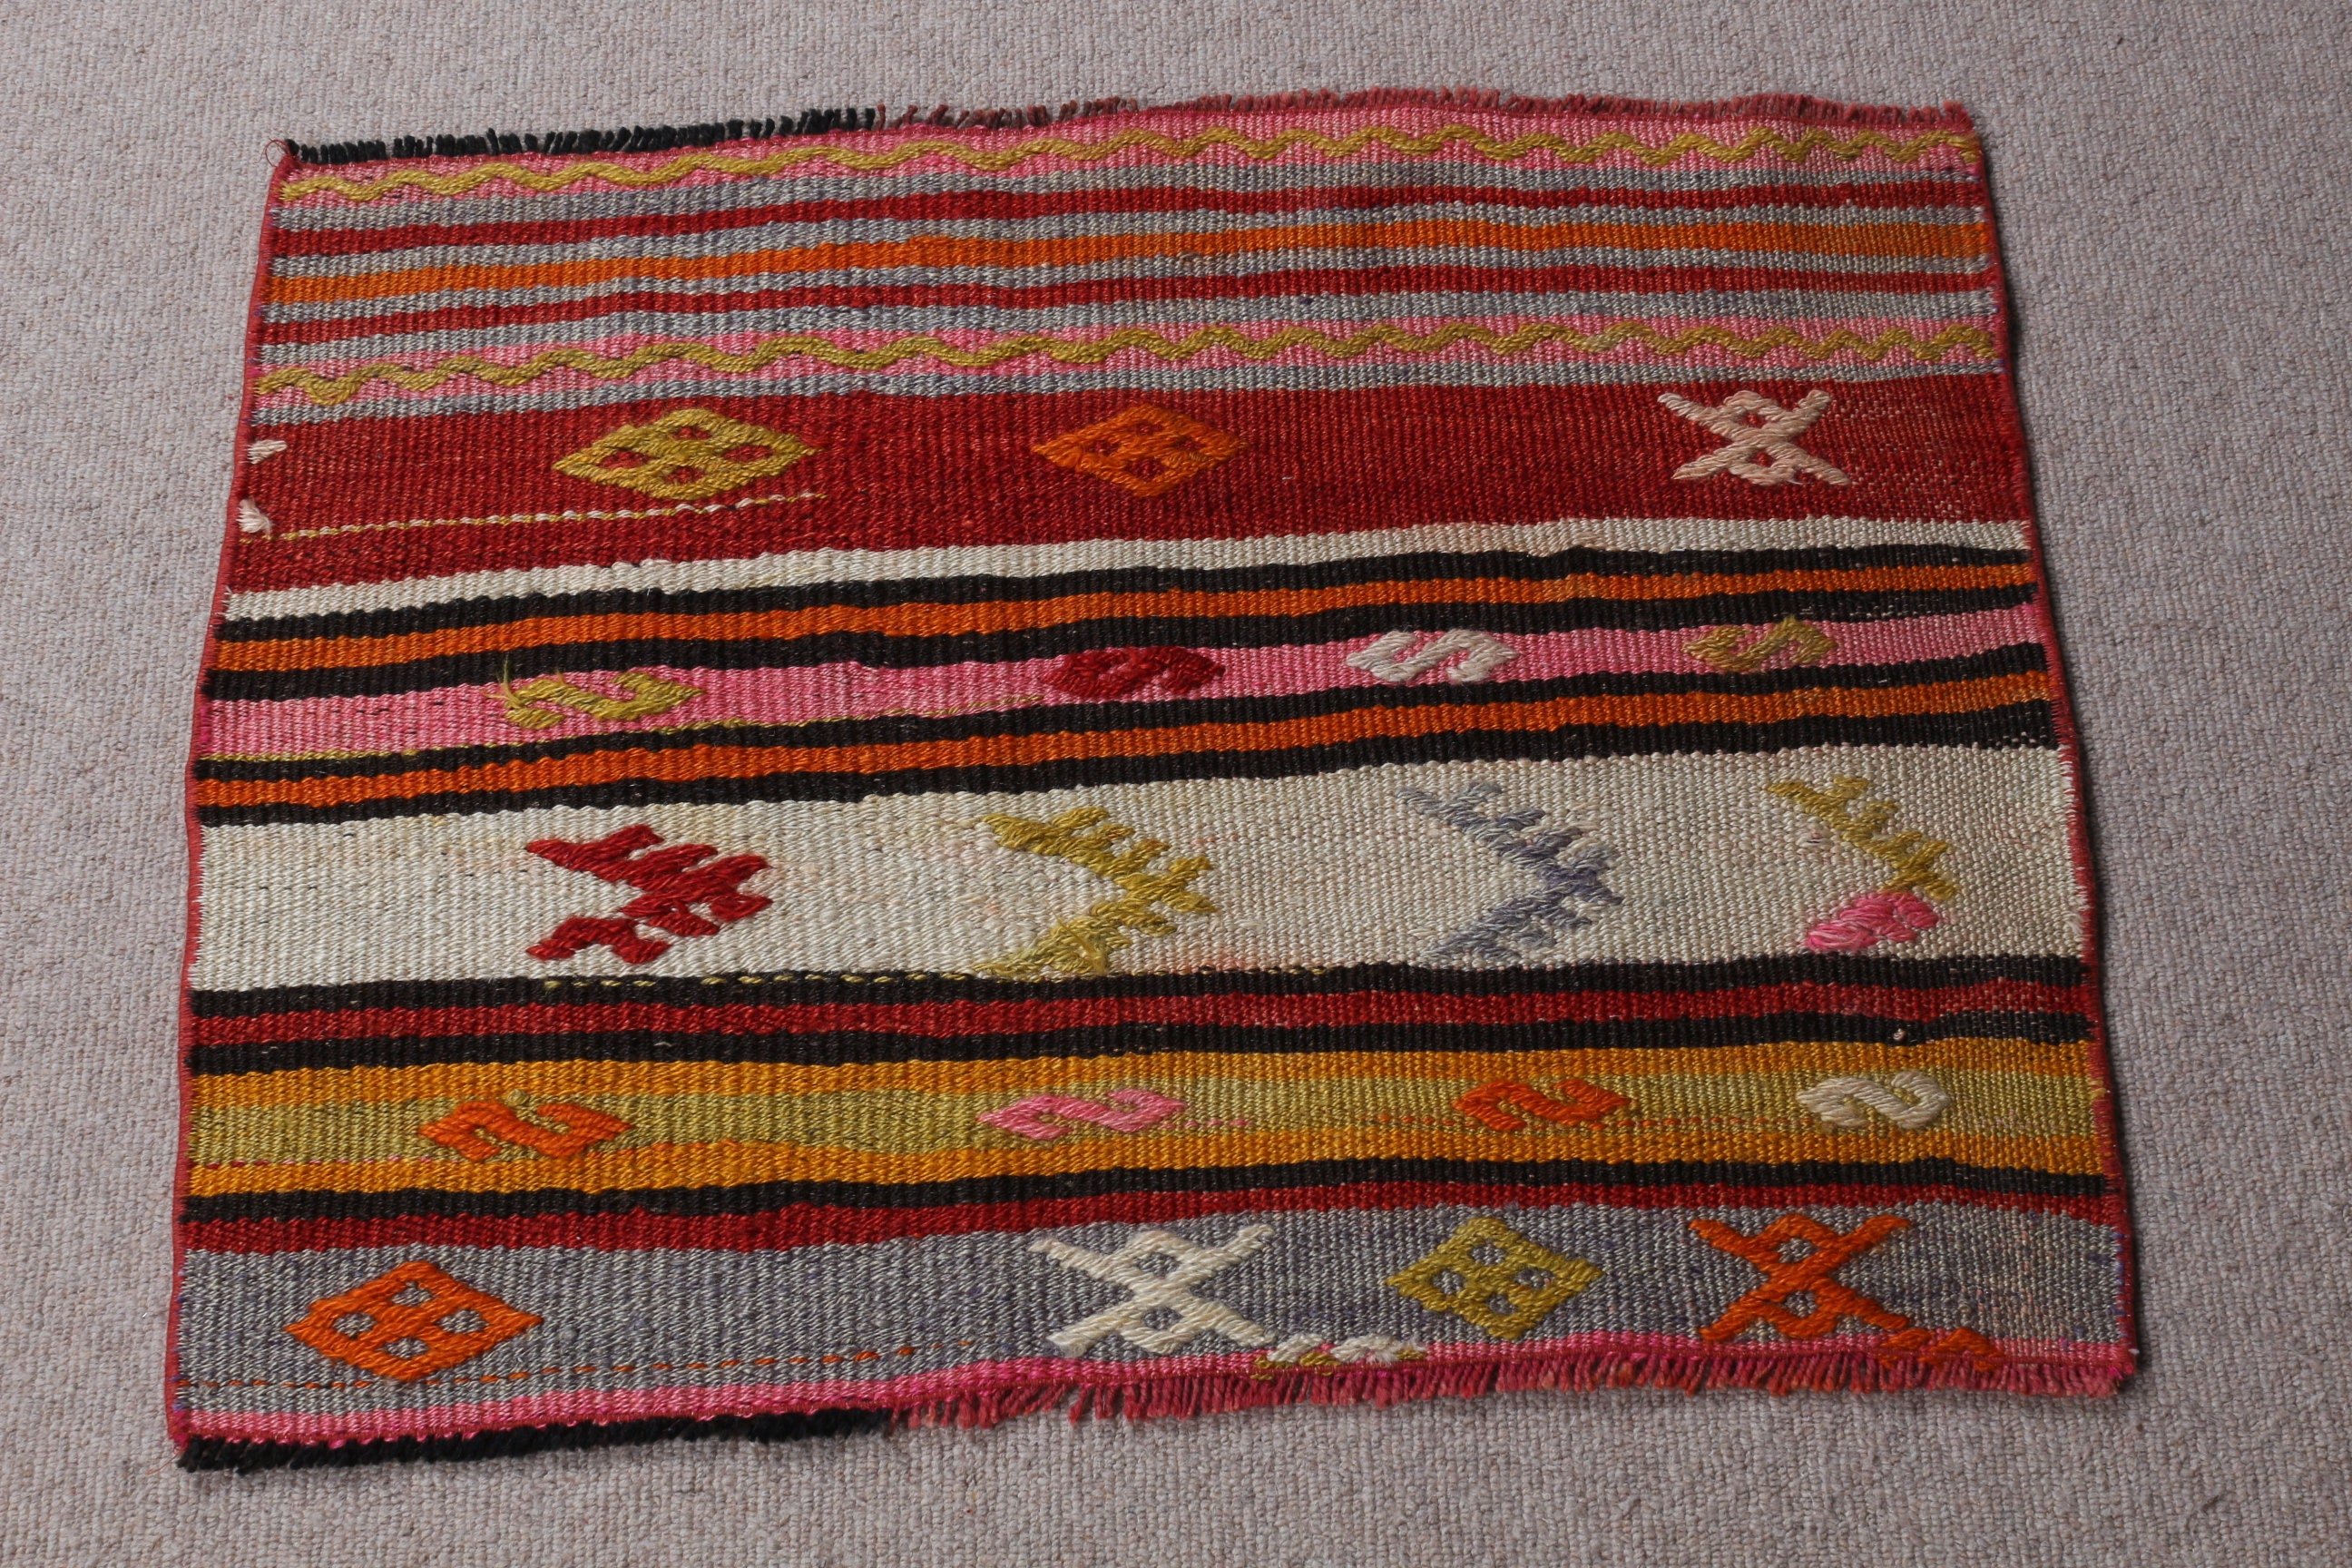 Vintage Rug, Turkish Rugs, Bathroom Rug, Retro Rug, Red Oriental Rug, Anatolian Rug, 2.5x1.9 ft Small Rug, Antique Rug, Nursery Rugs, Kilim